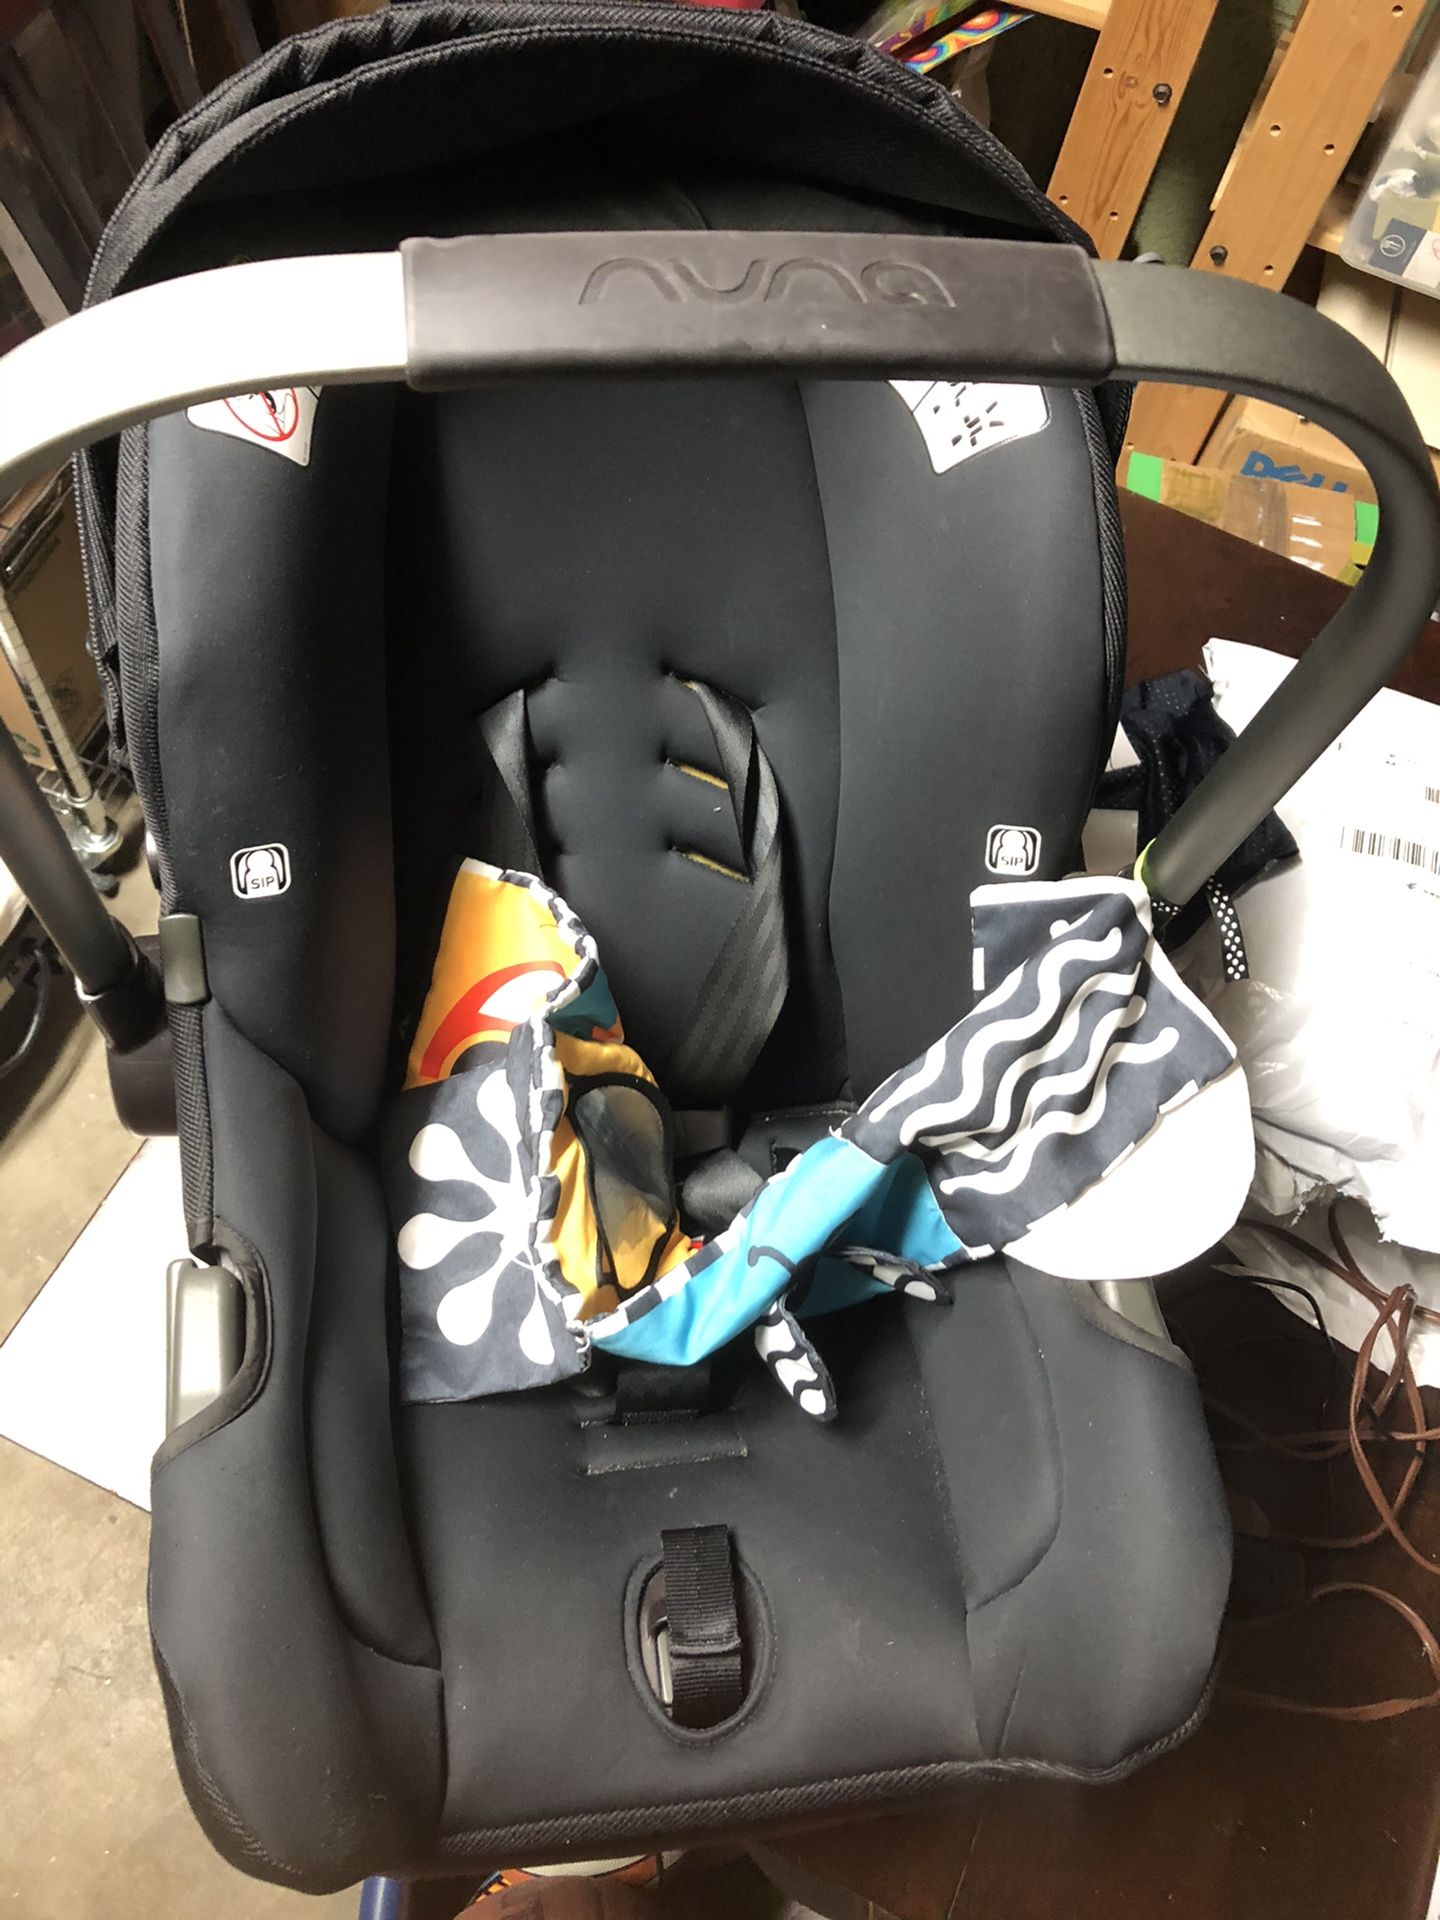 Nuna infant car seat with base